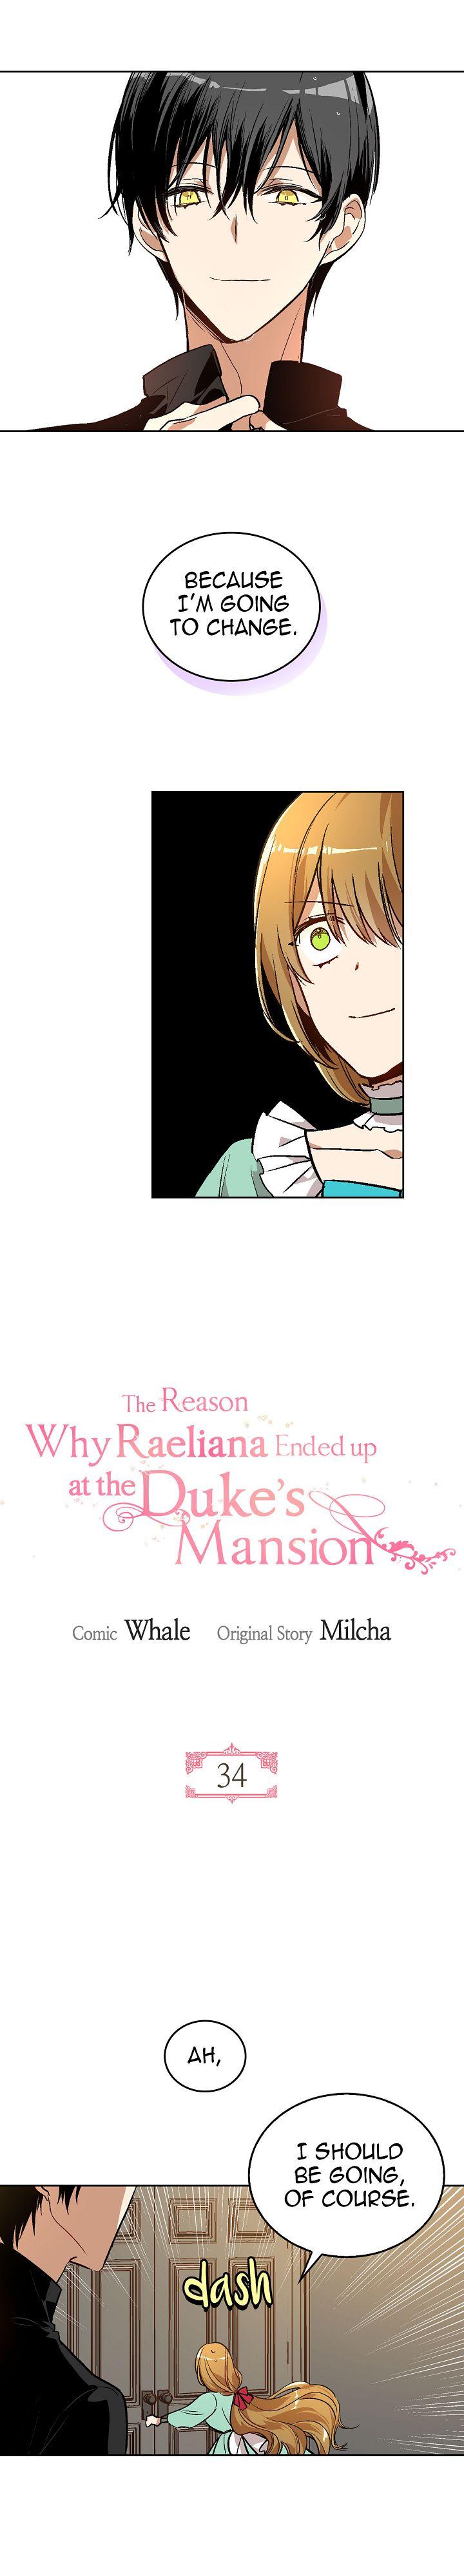 The Reason Why Raeliana Ended up at the Duke